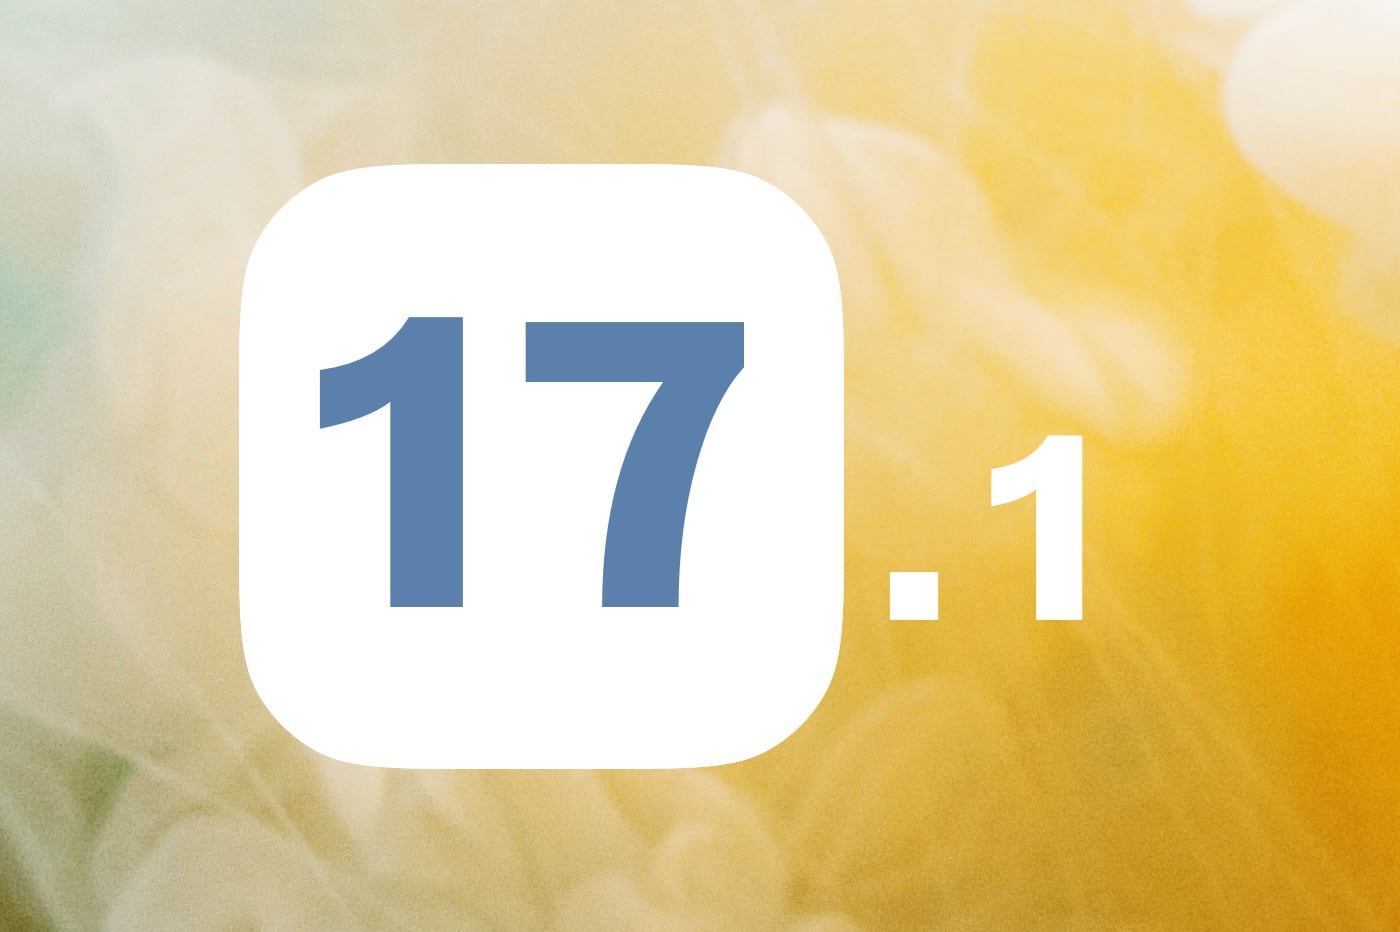 iOS 17.1 fond jaune